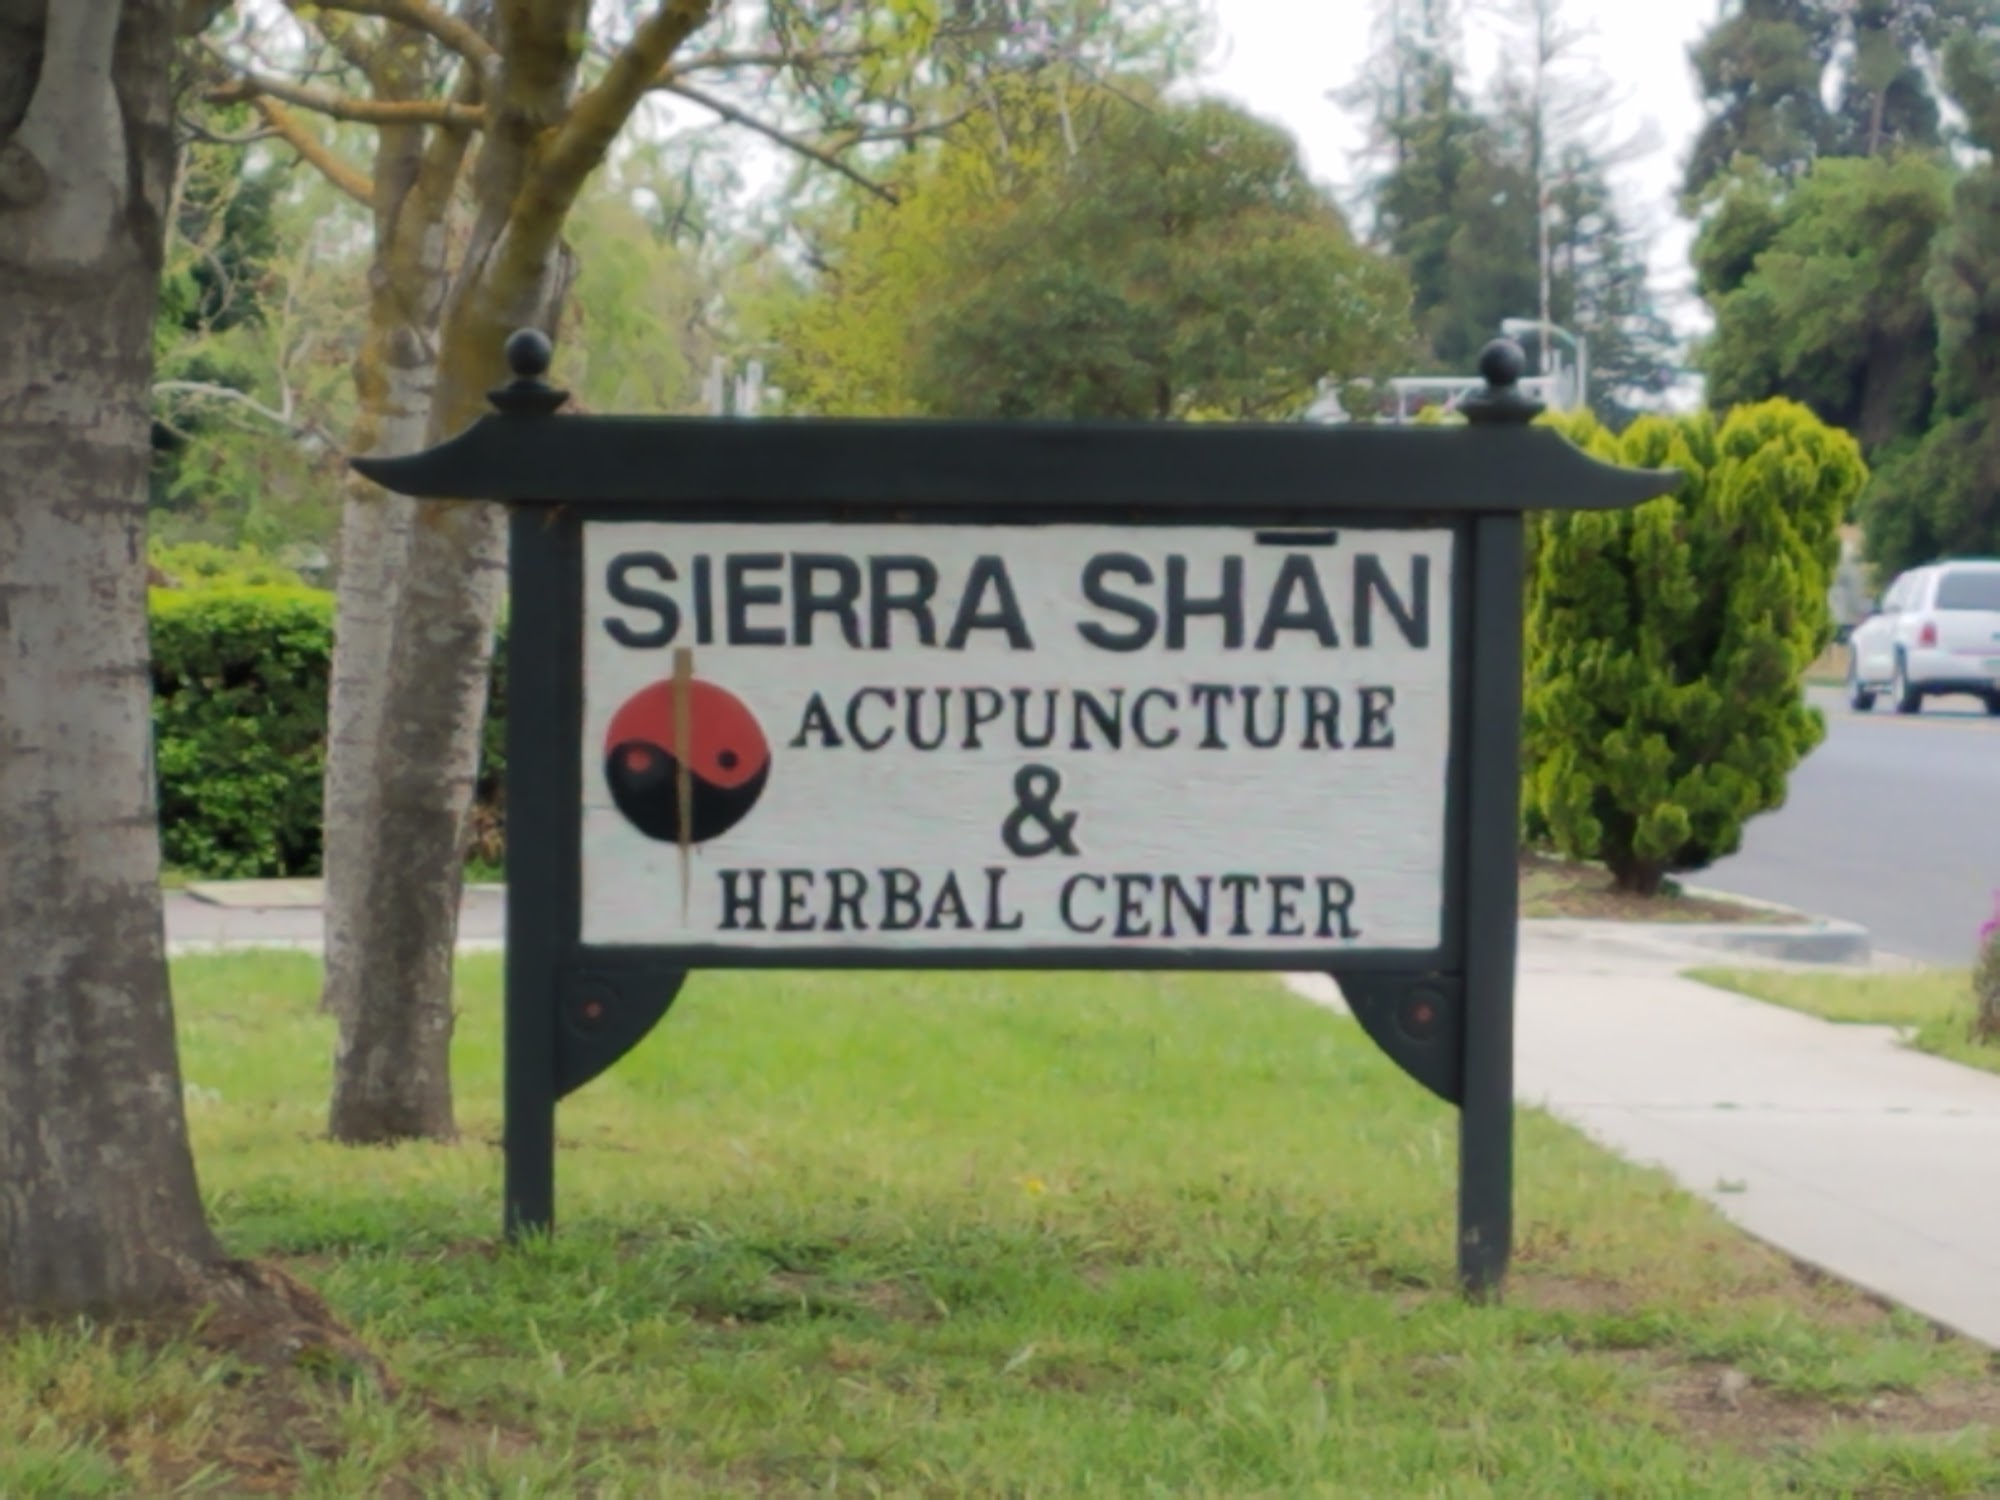 Sierra Shan Acupuncture